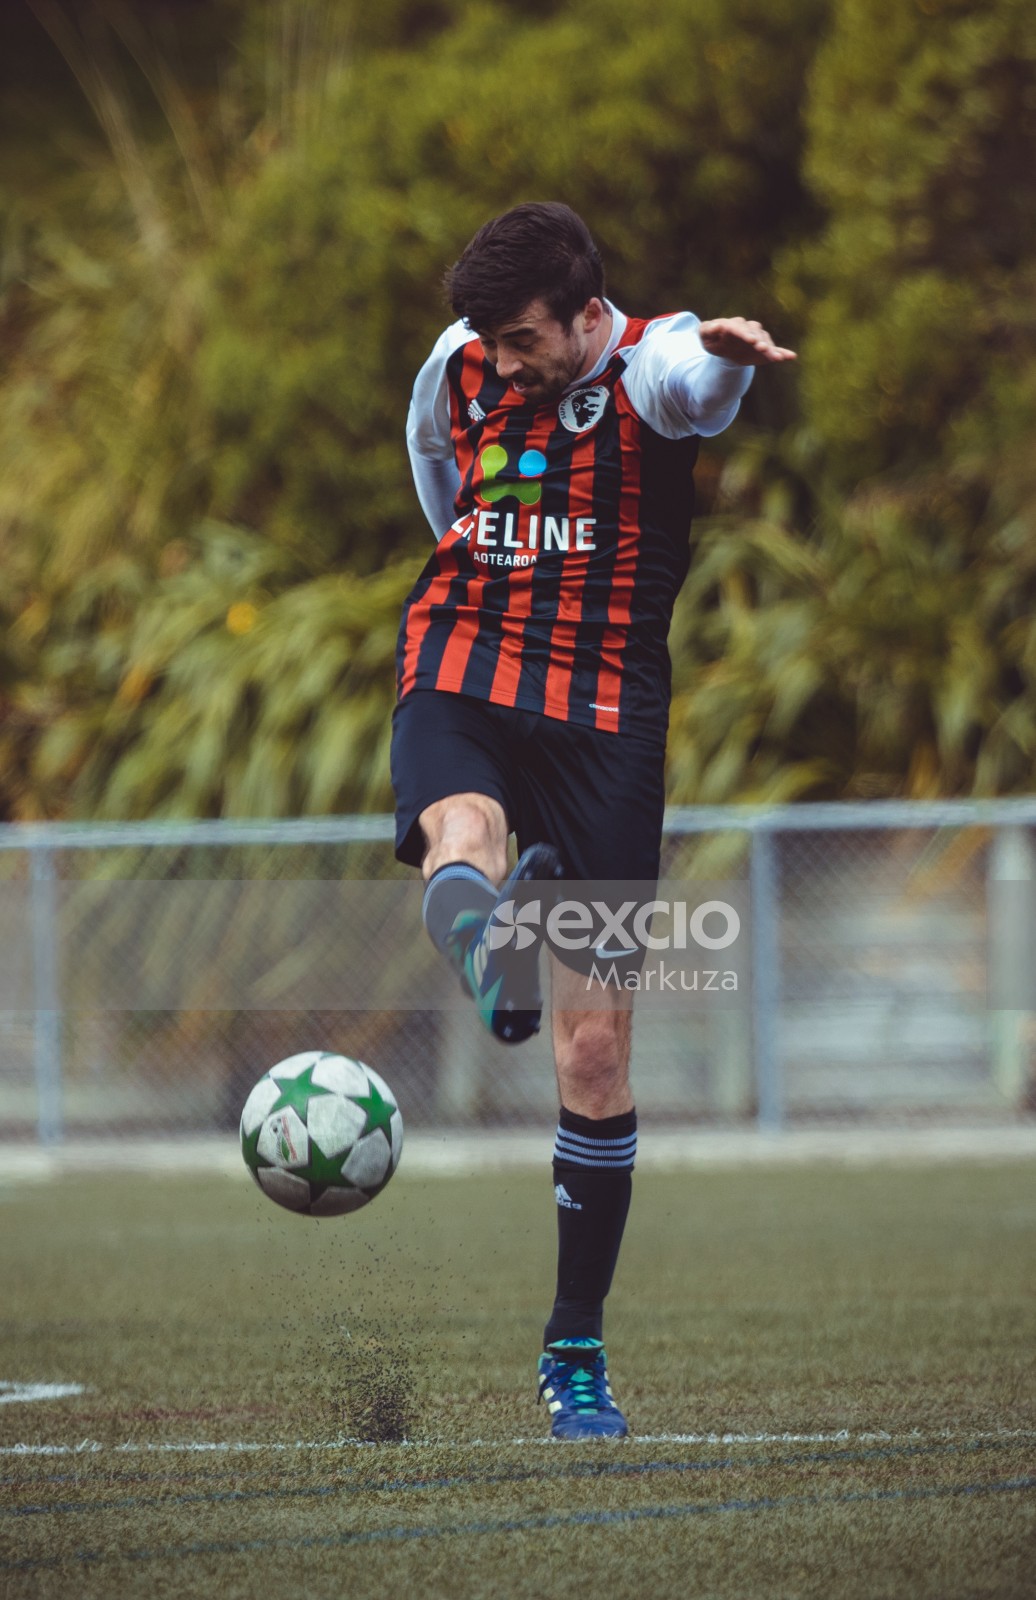 Football player in striped shirt kicks ball - Sports Zone sunday league